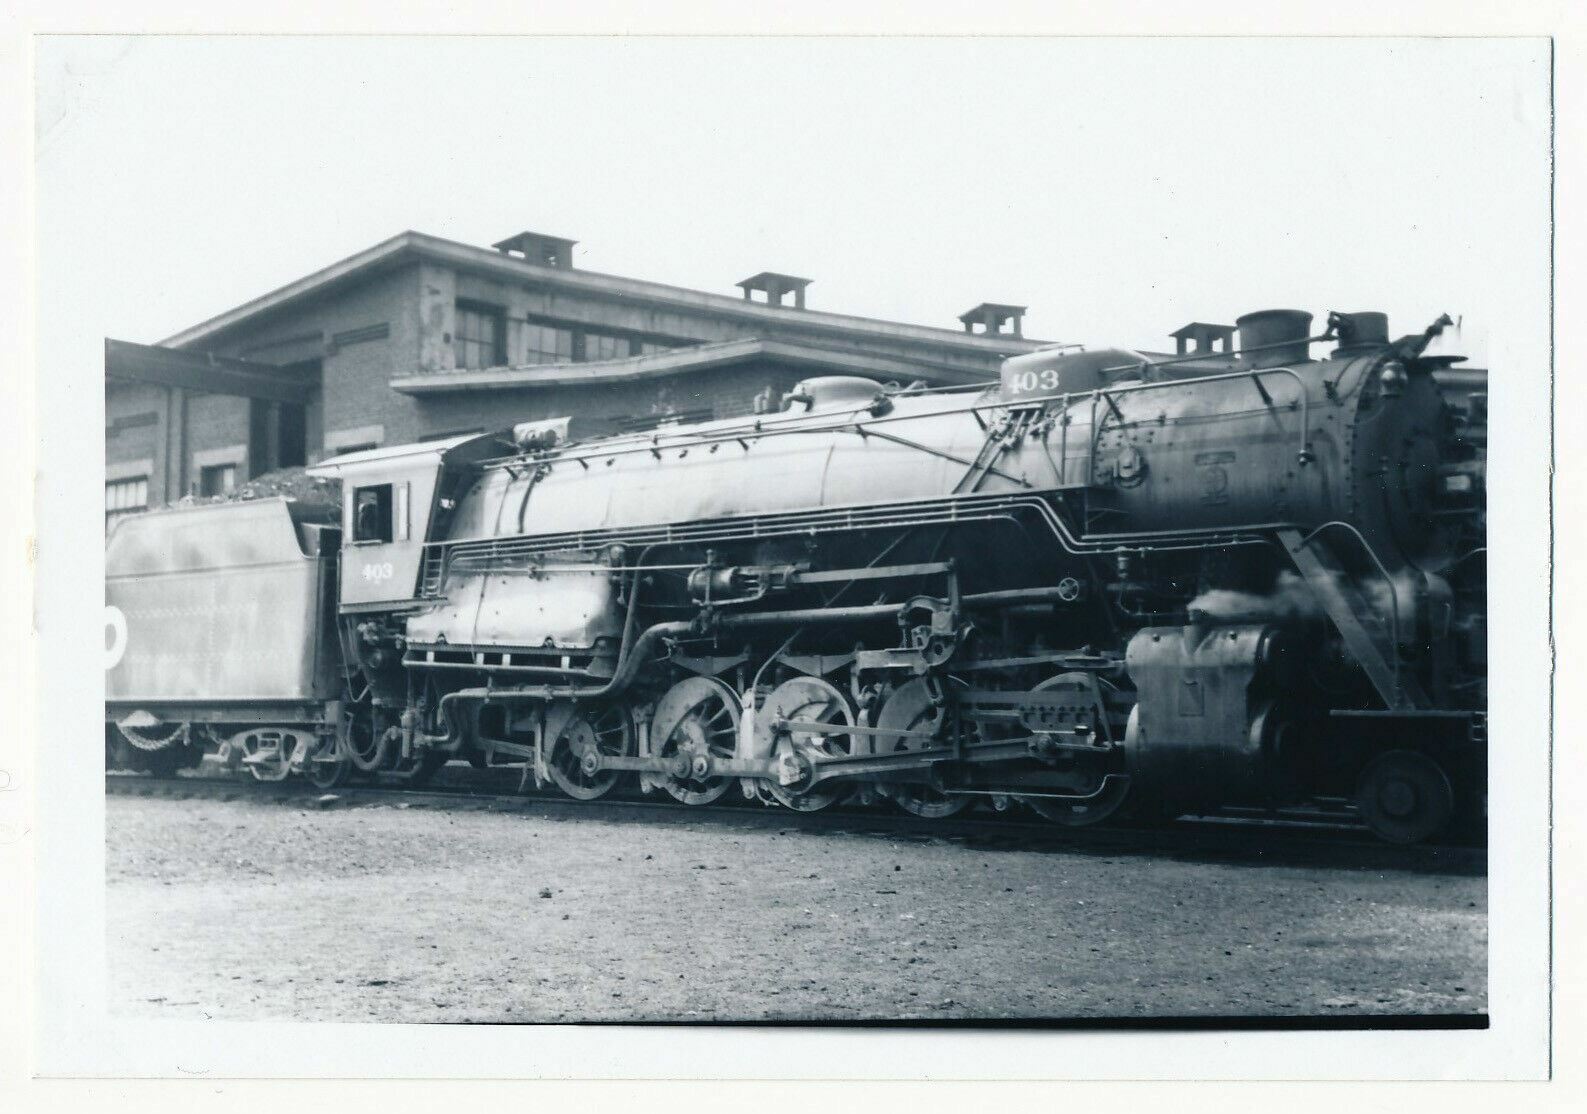 Lehigh & New England Railroad Locomotive no. 403